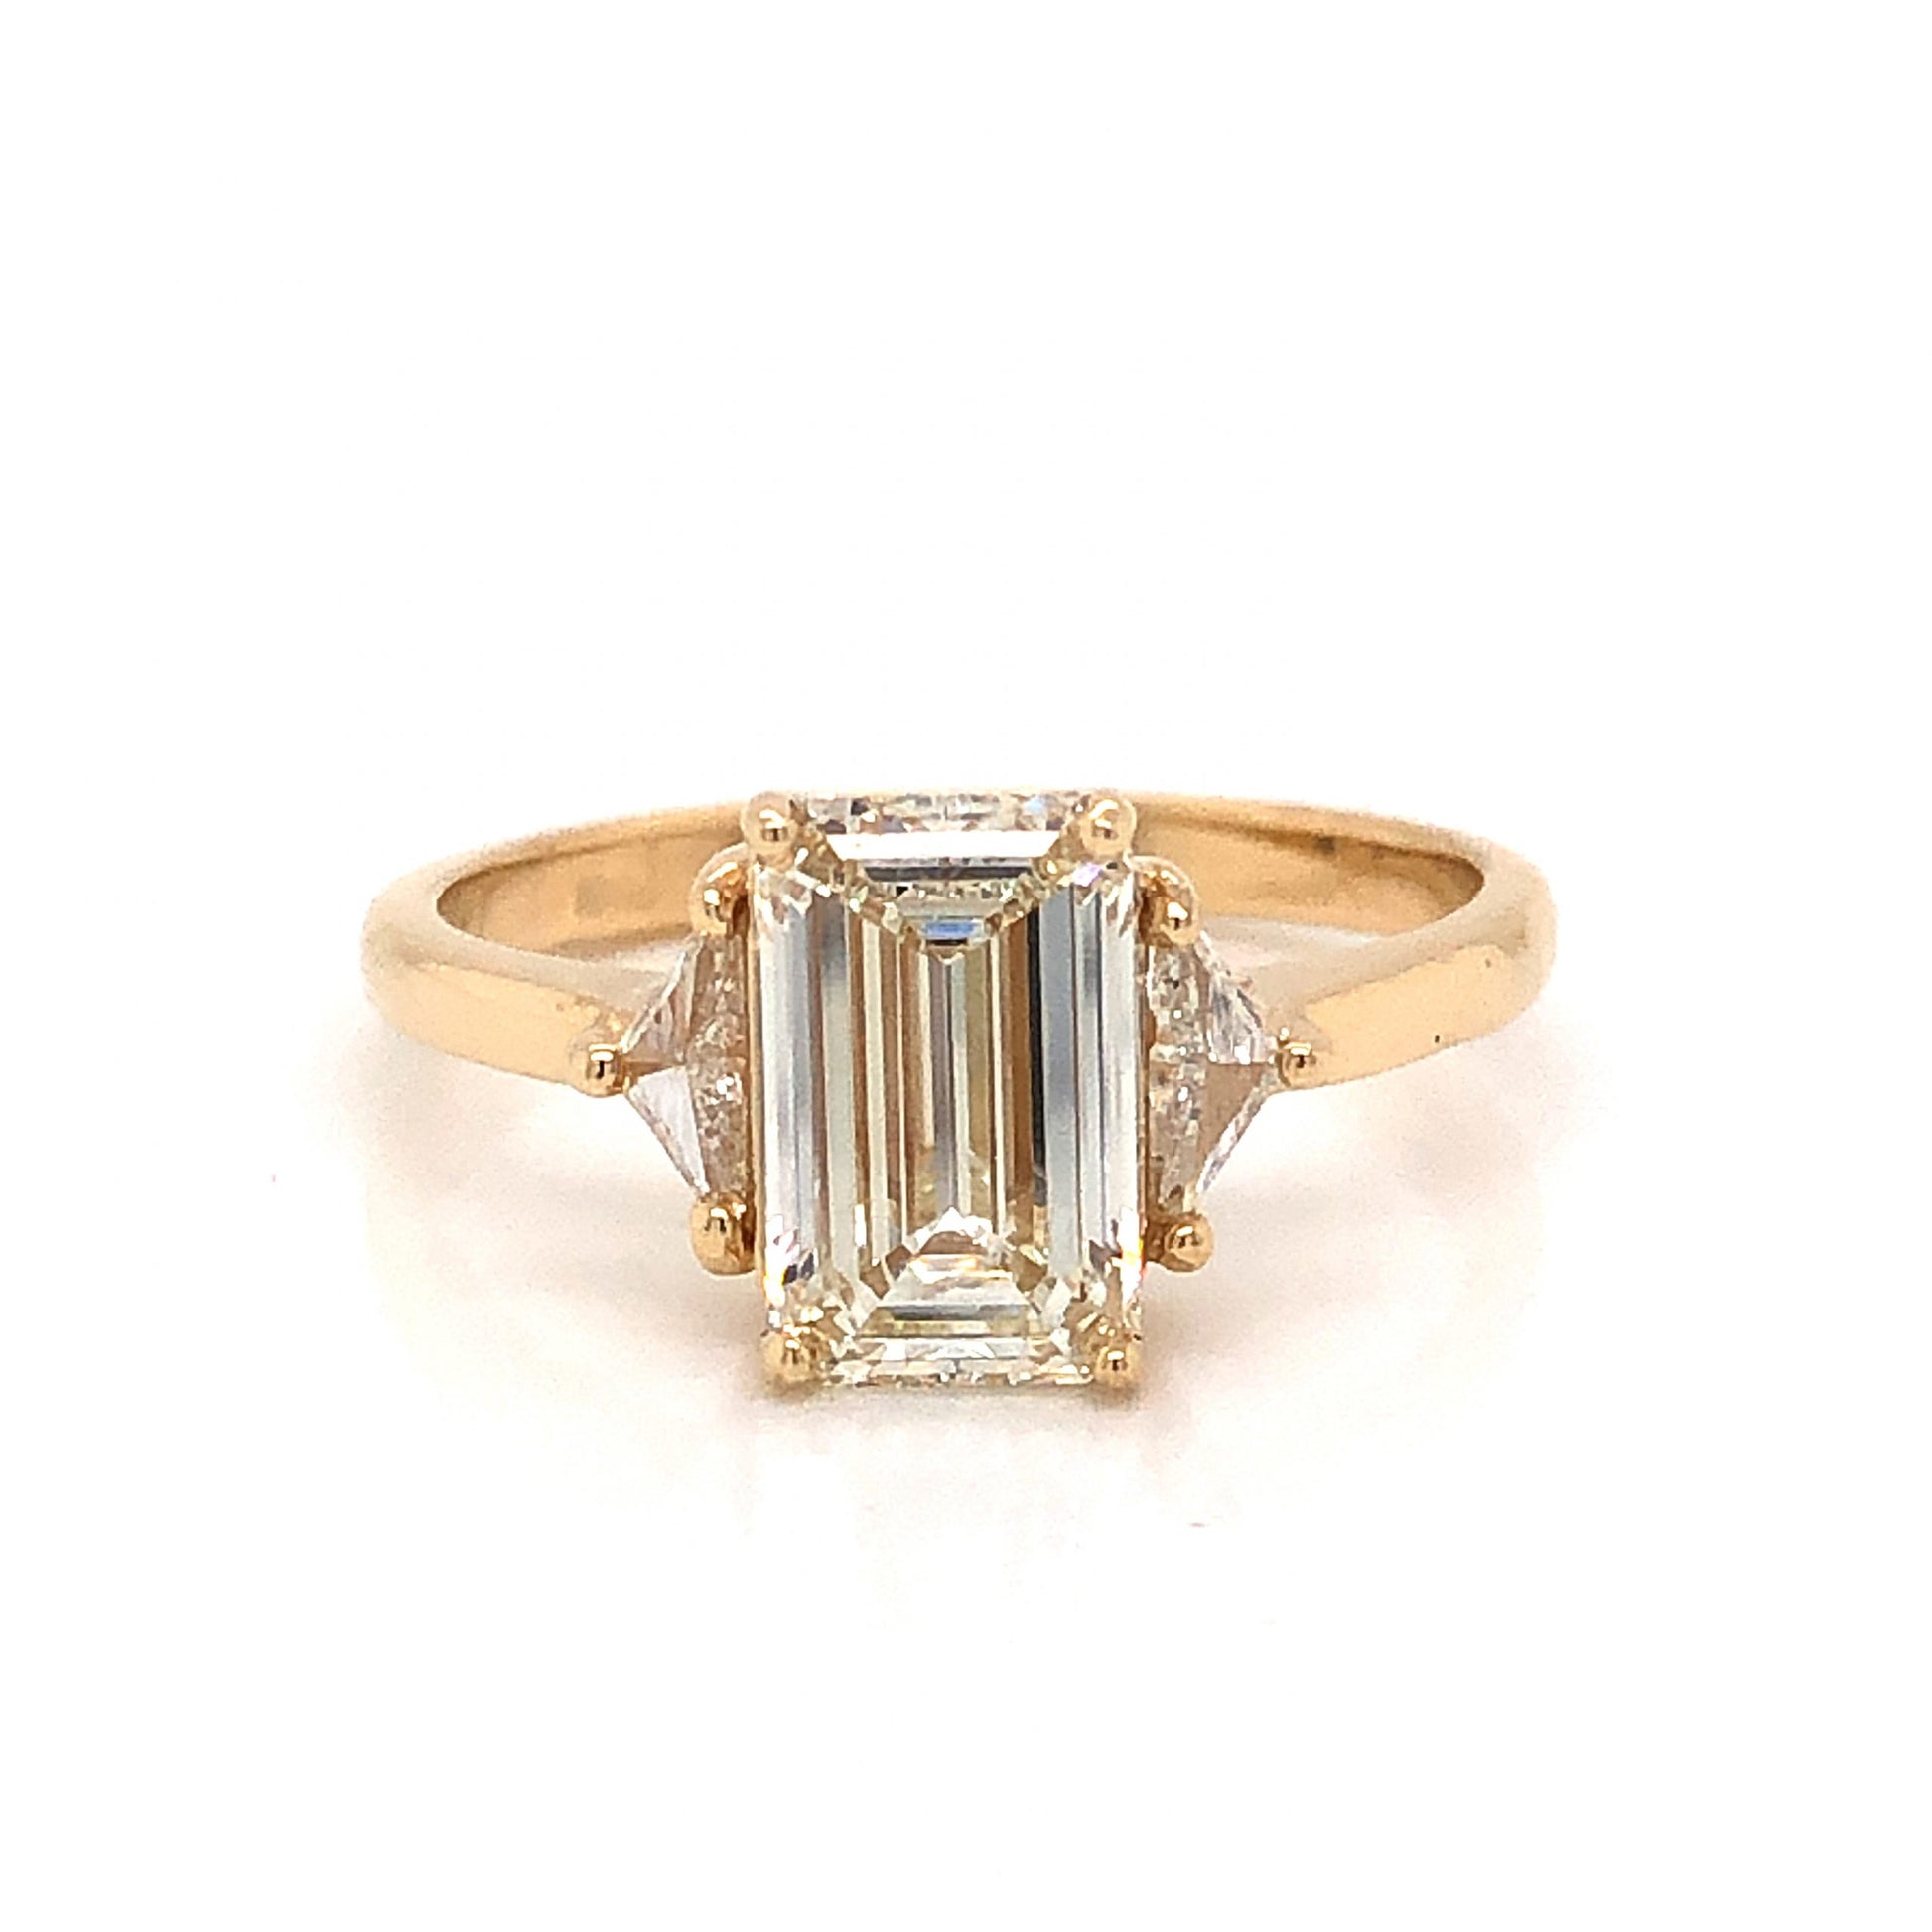 1.50 Emerald Cut Diamond Engagement Ring in 14k Yellow Gold